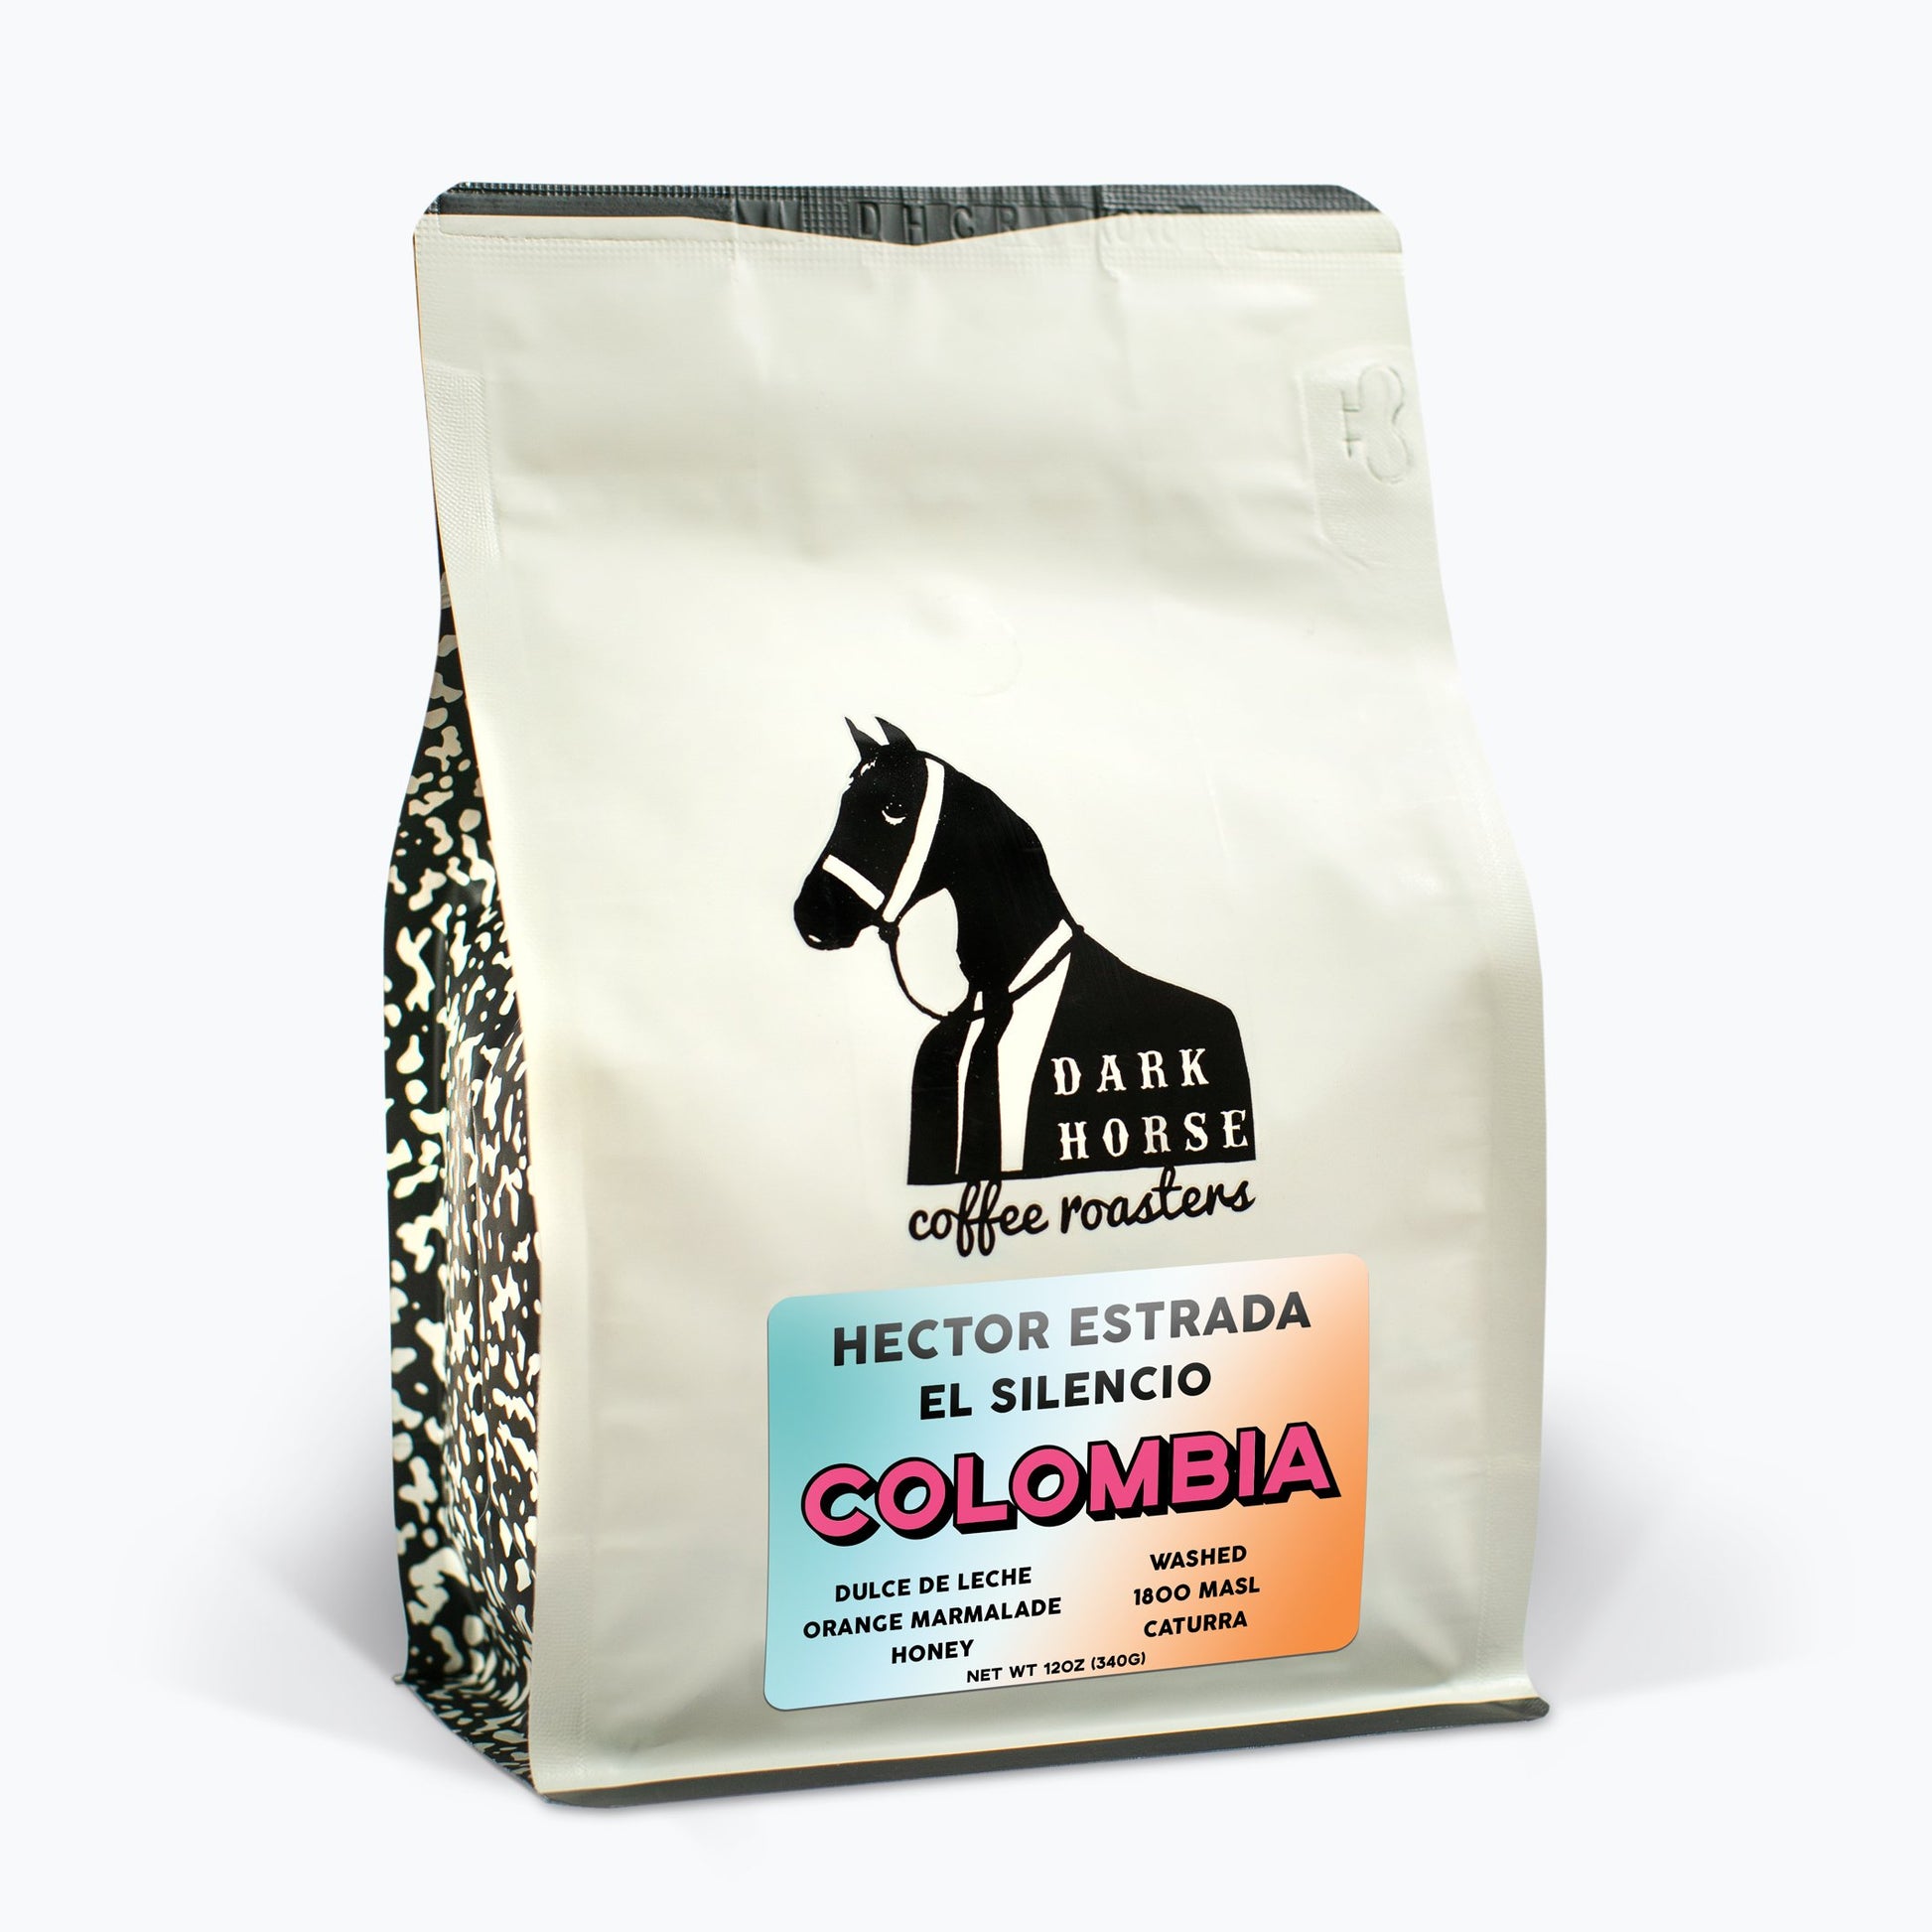 Colombian coffee from Dark Horse Coffee Roasters